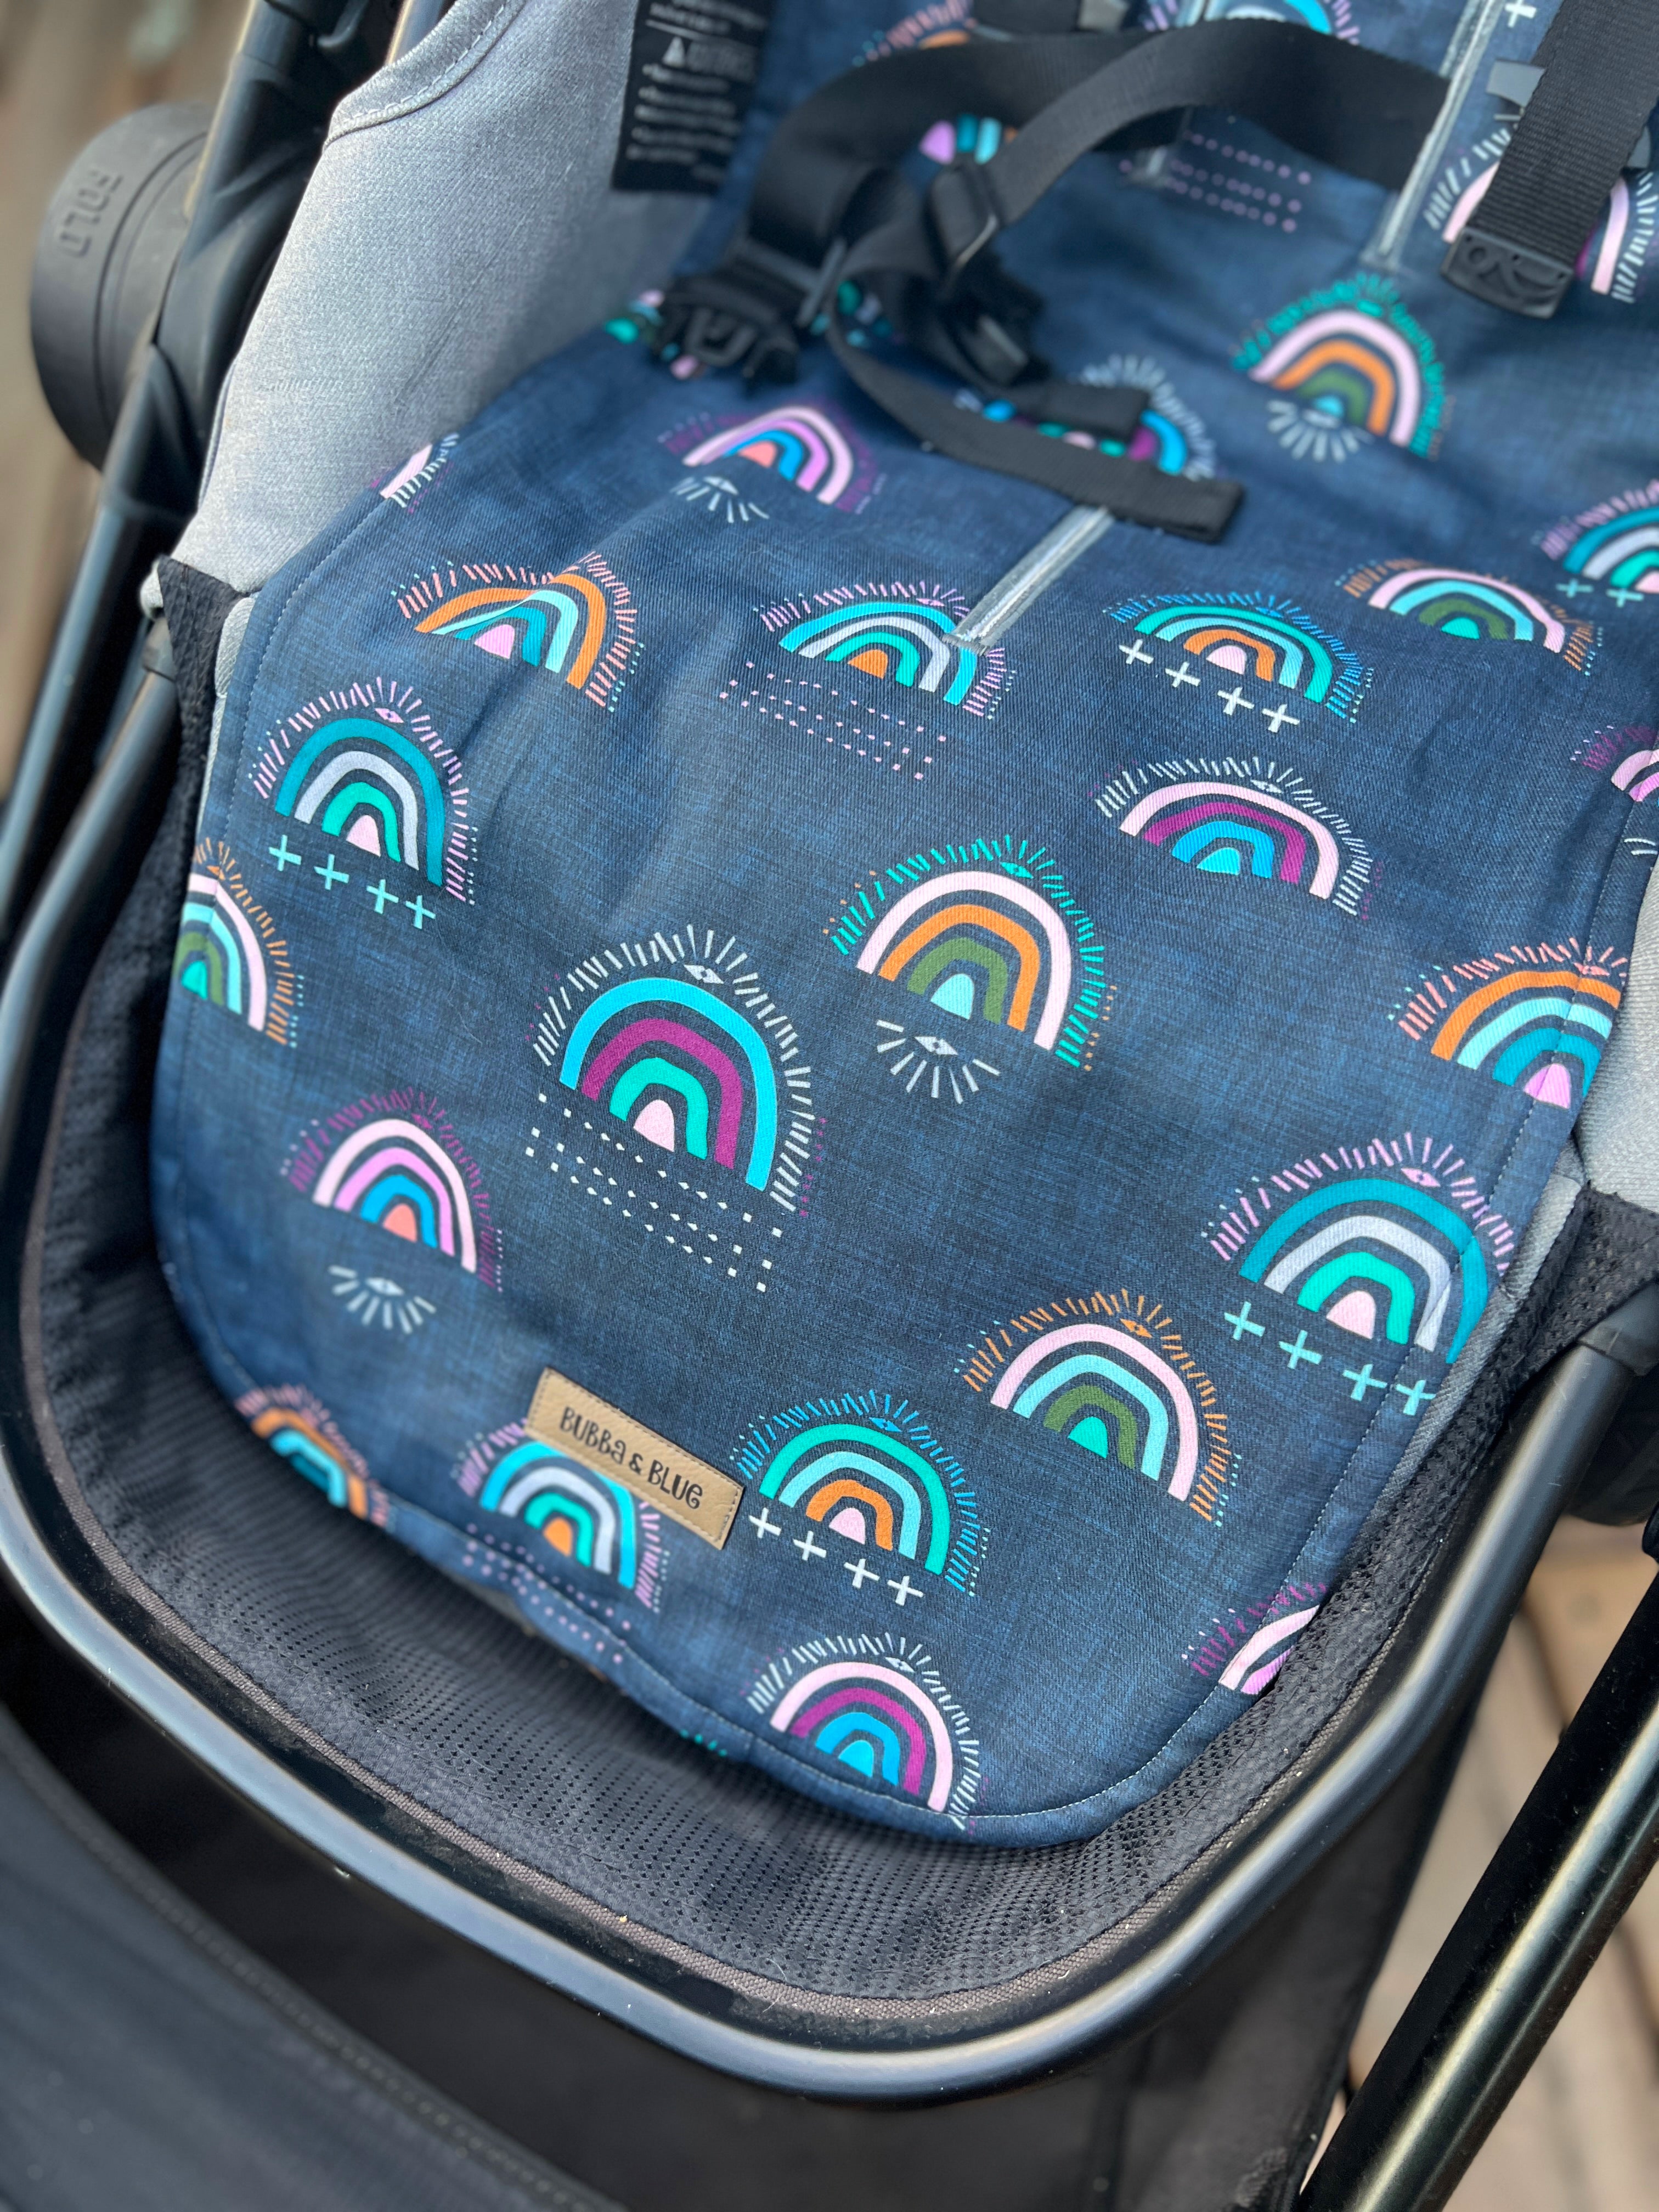 Universal fit stroller liner in navy rainbow